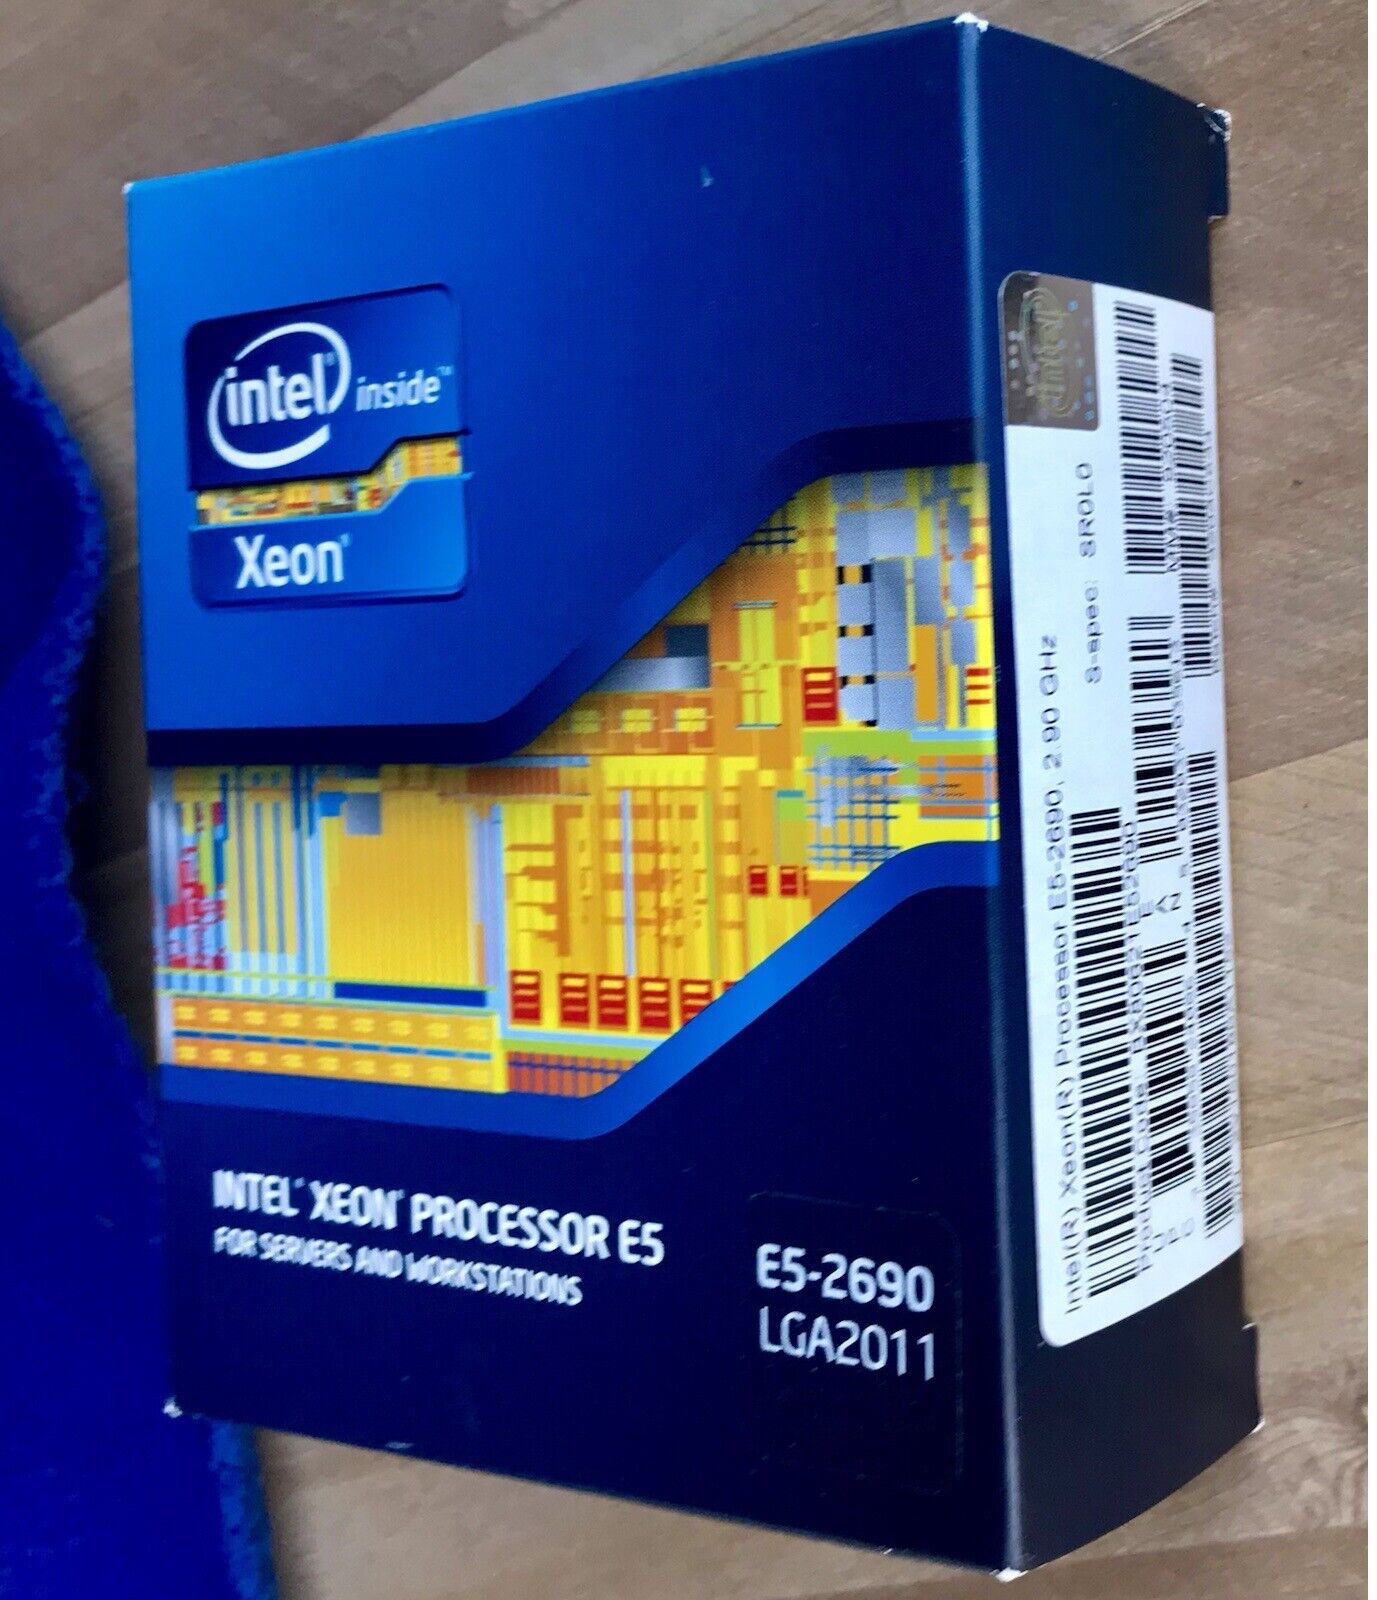 Collector Item: Intel Xeon Processor E5-2960 LGA2011 Retail Box + Manual. NO CPU